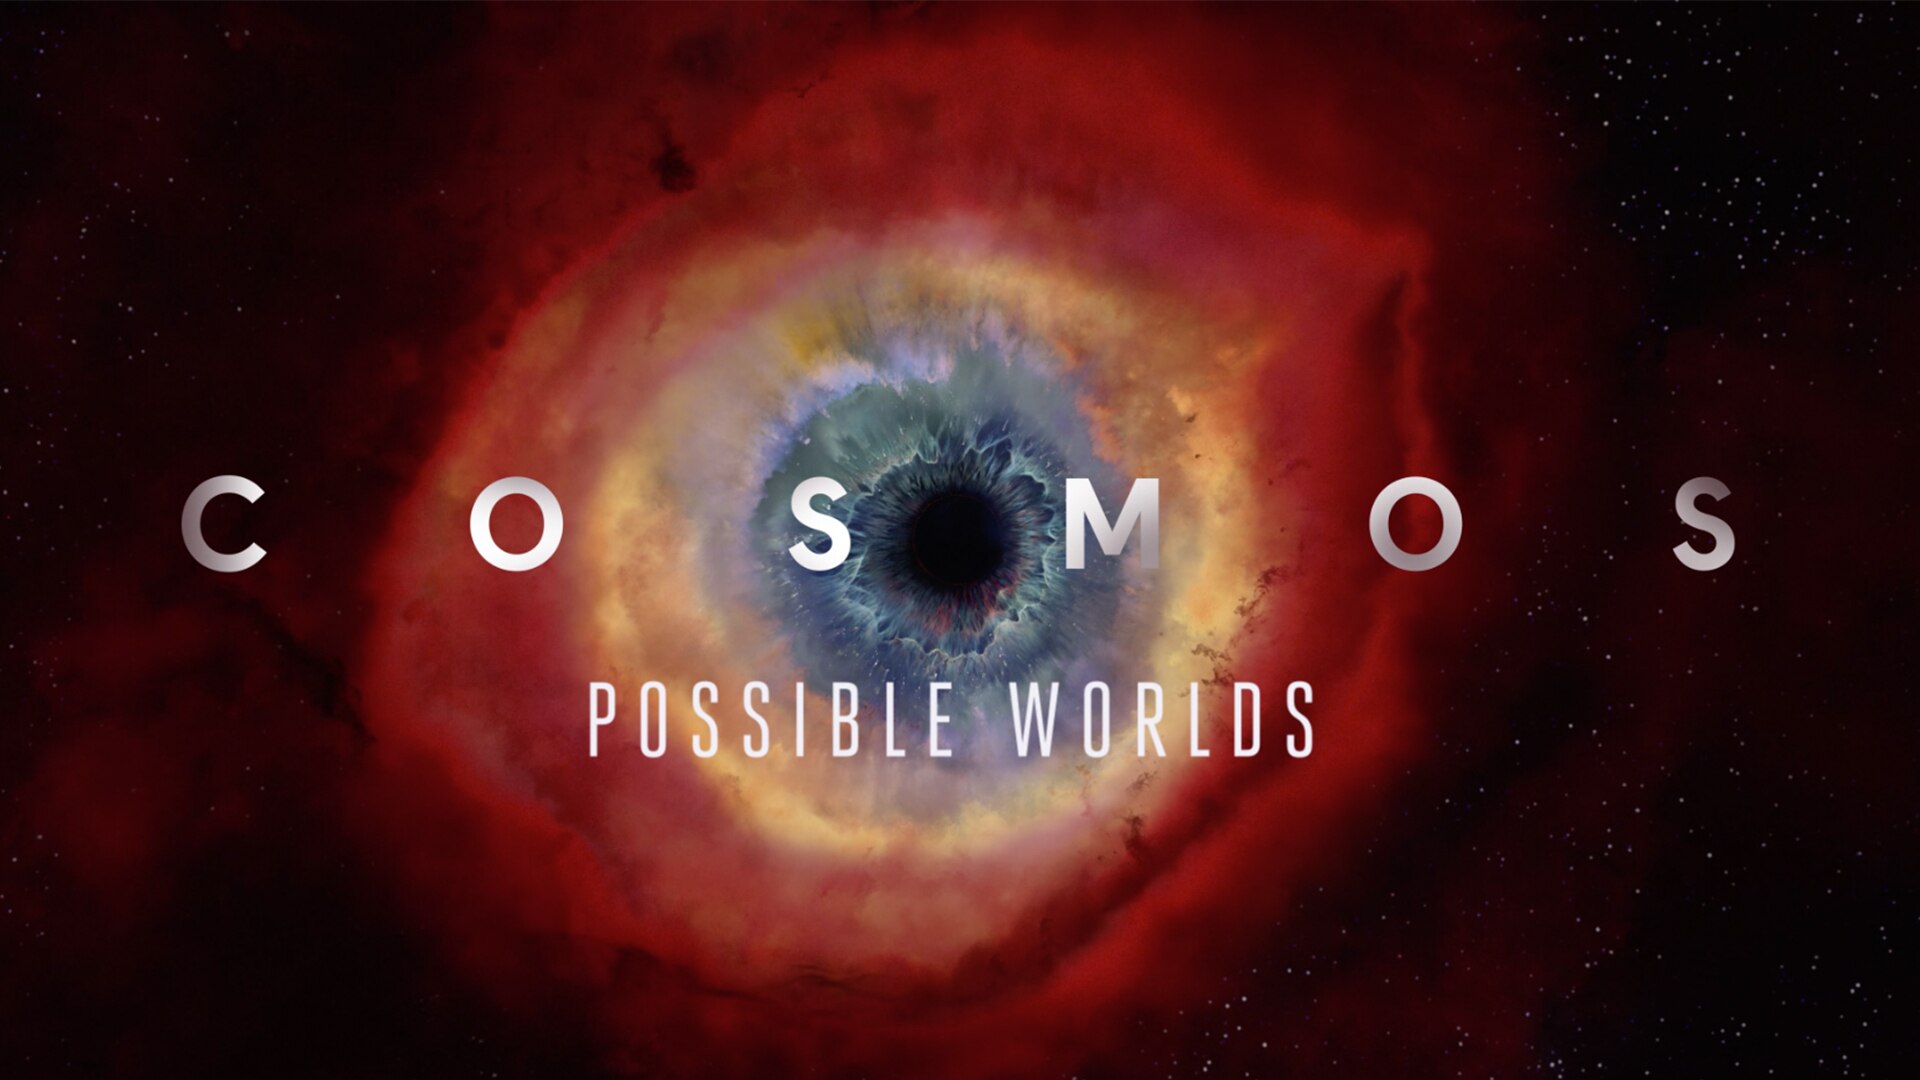 the new season of Cosmos